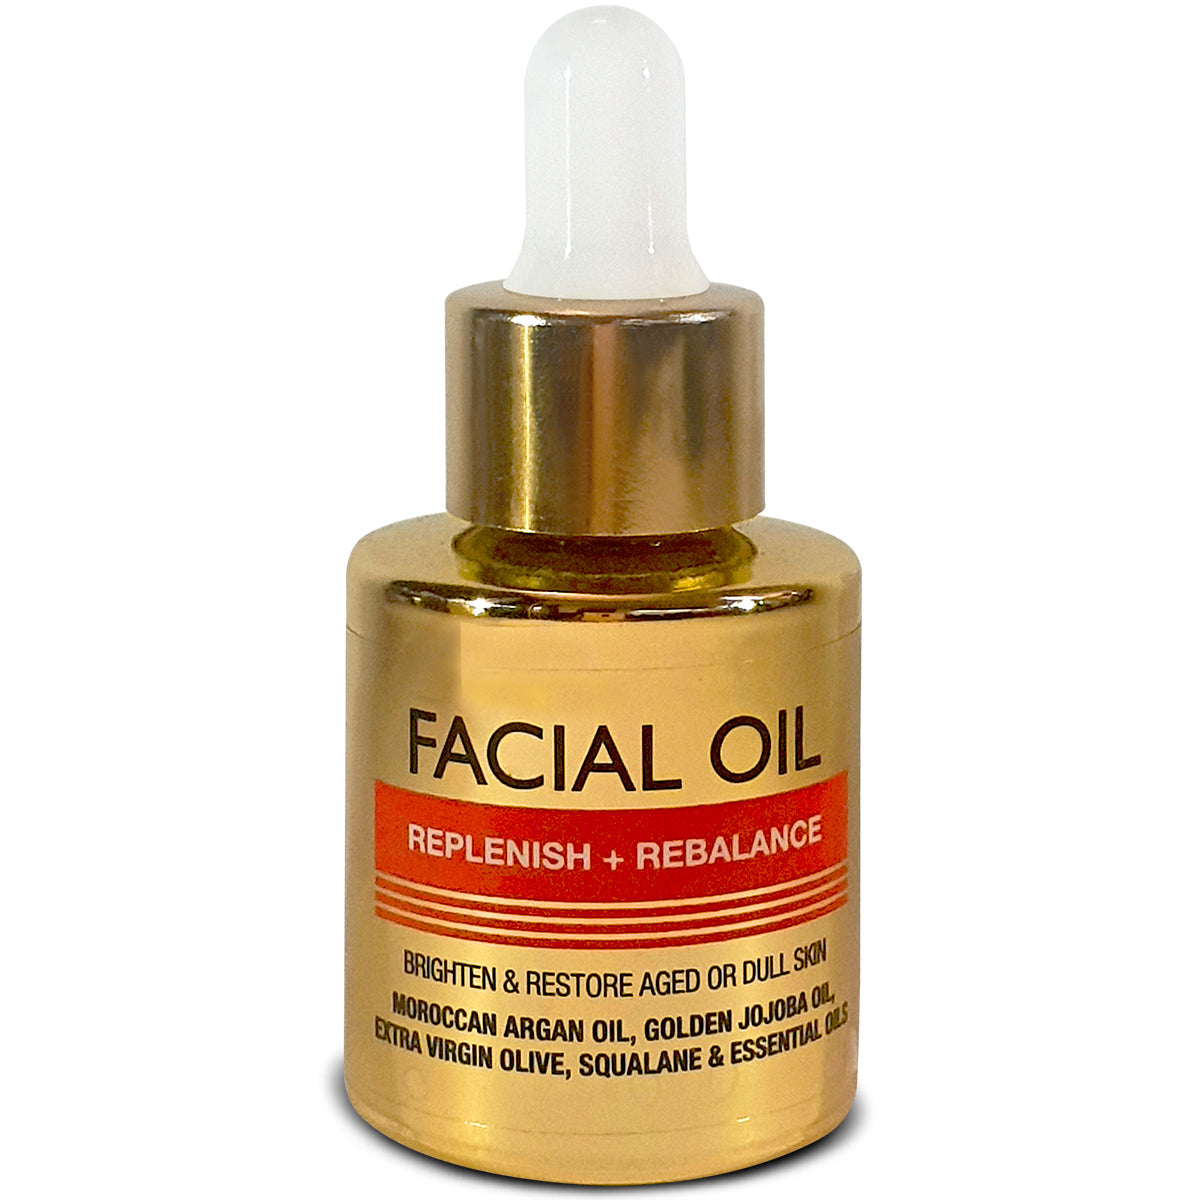 St.Botanica Pure Radiance Facial Oil Replenish + Rebalance - Brighten & Restore Aged or Dull Skin, 20 ml (STBOT574)